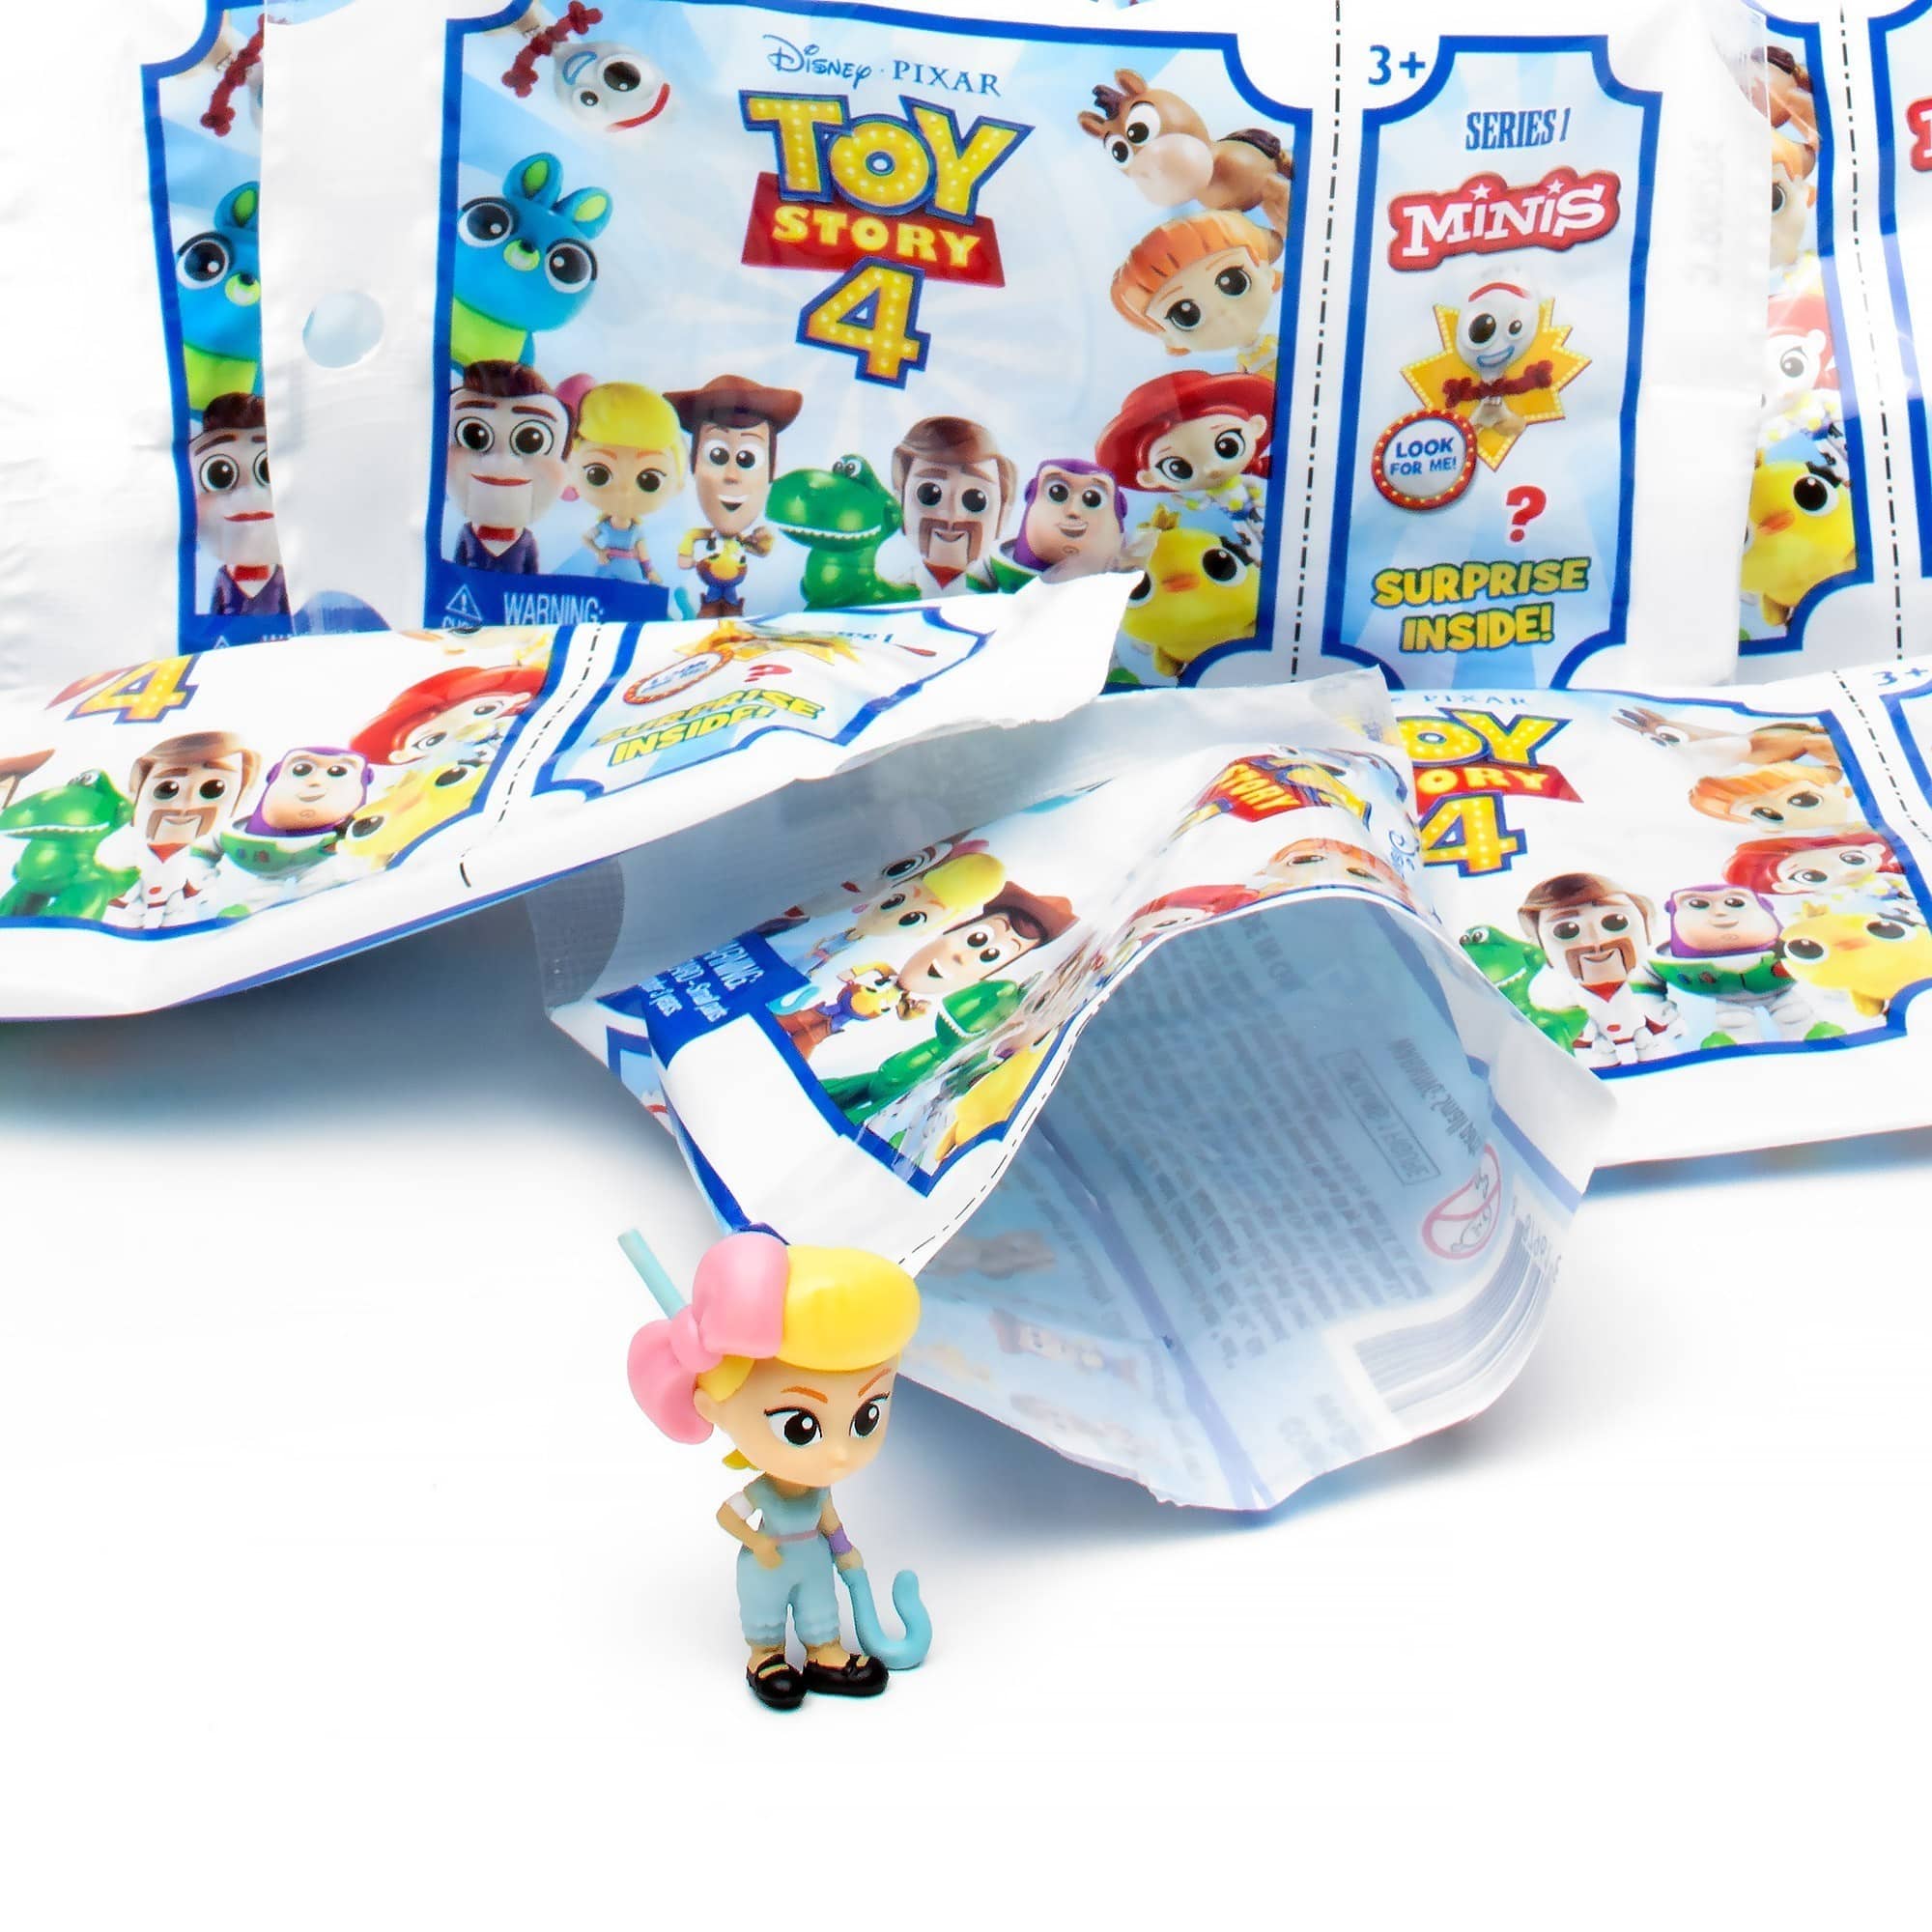 Toy Story 4 Minis - Surprise Mini Figure - Series 1